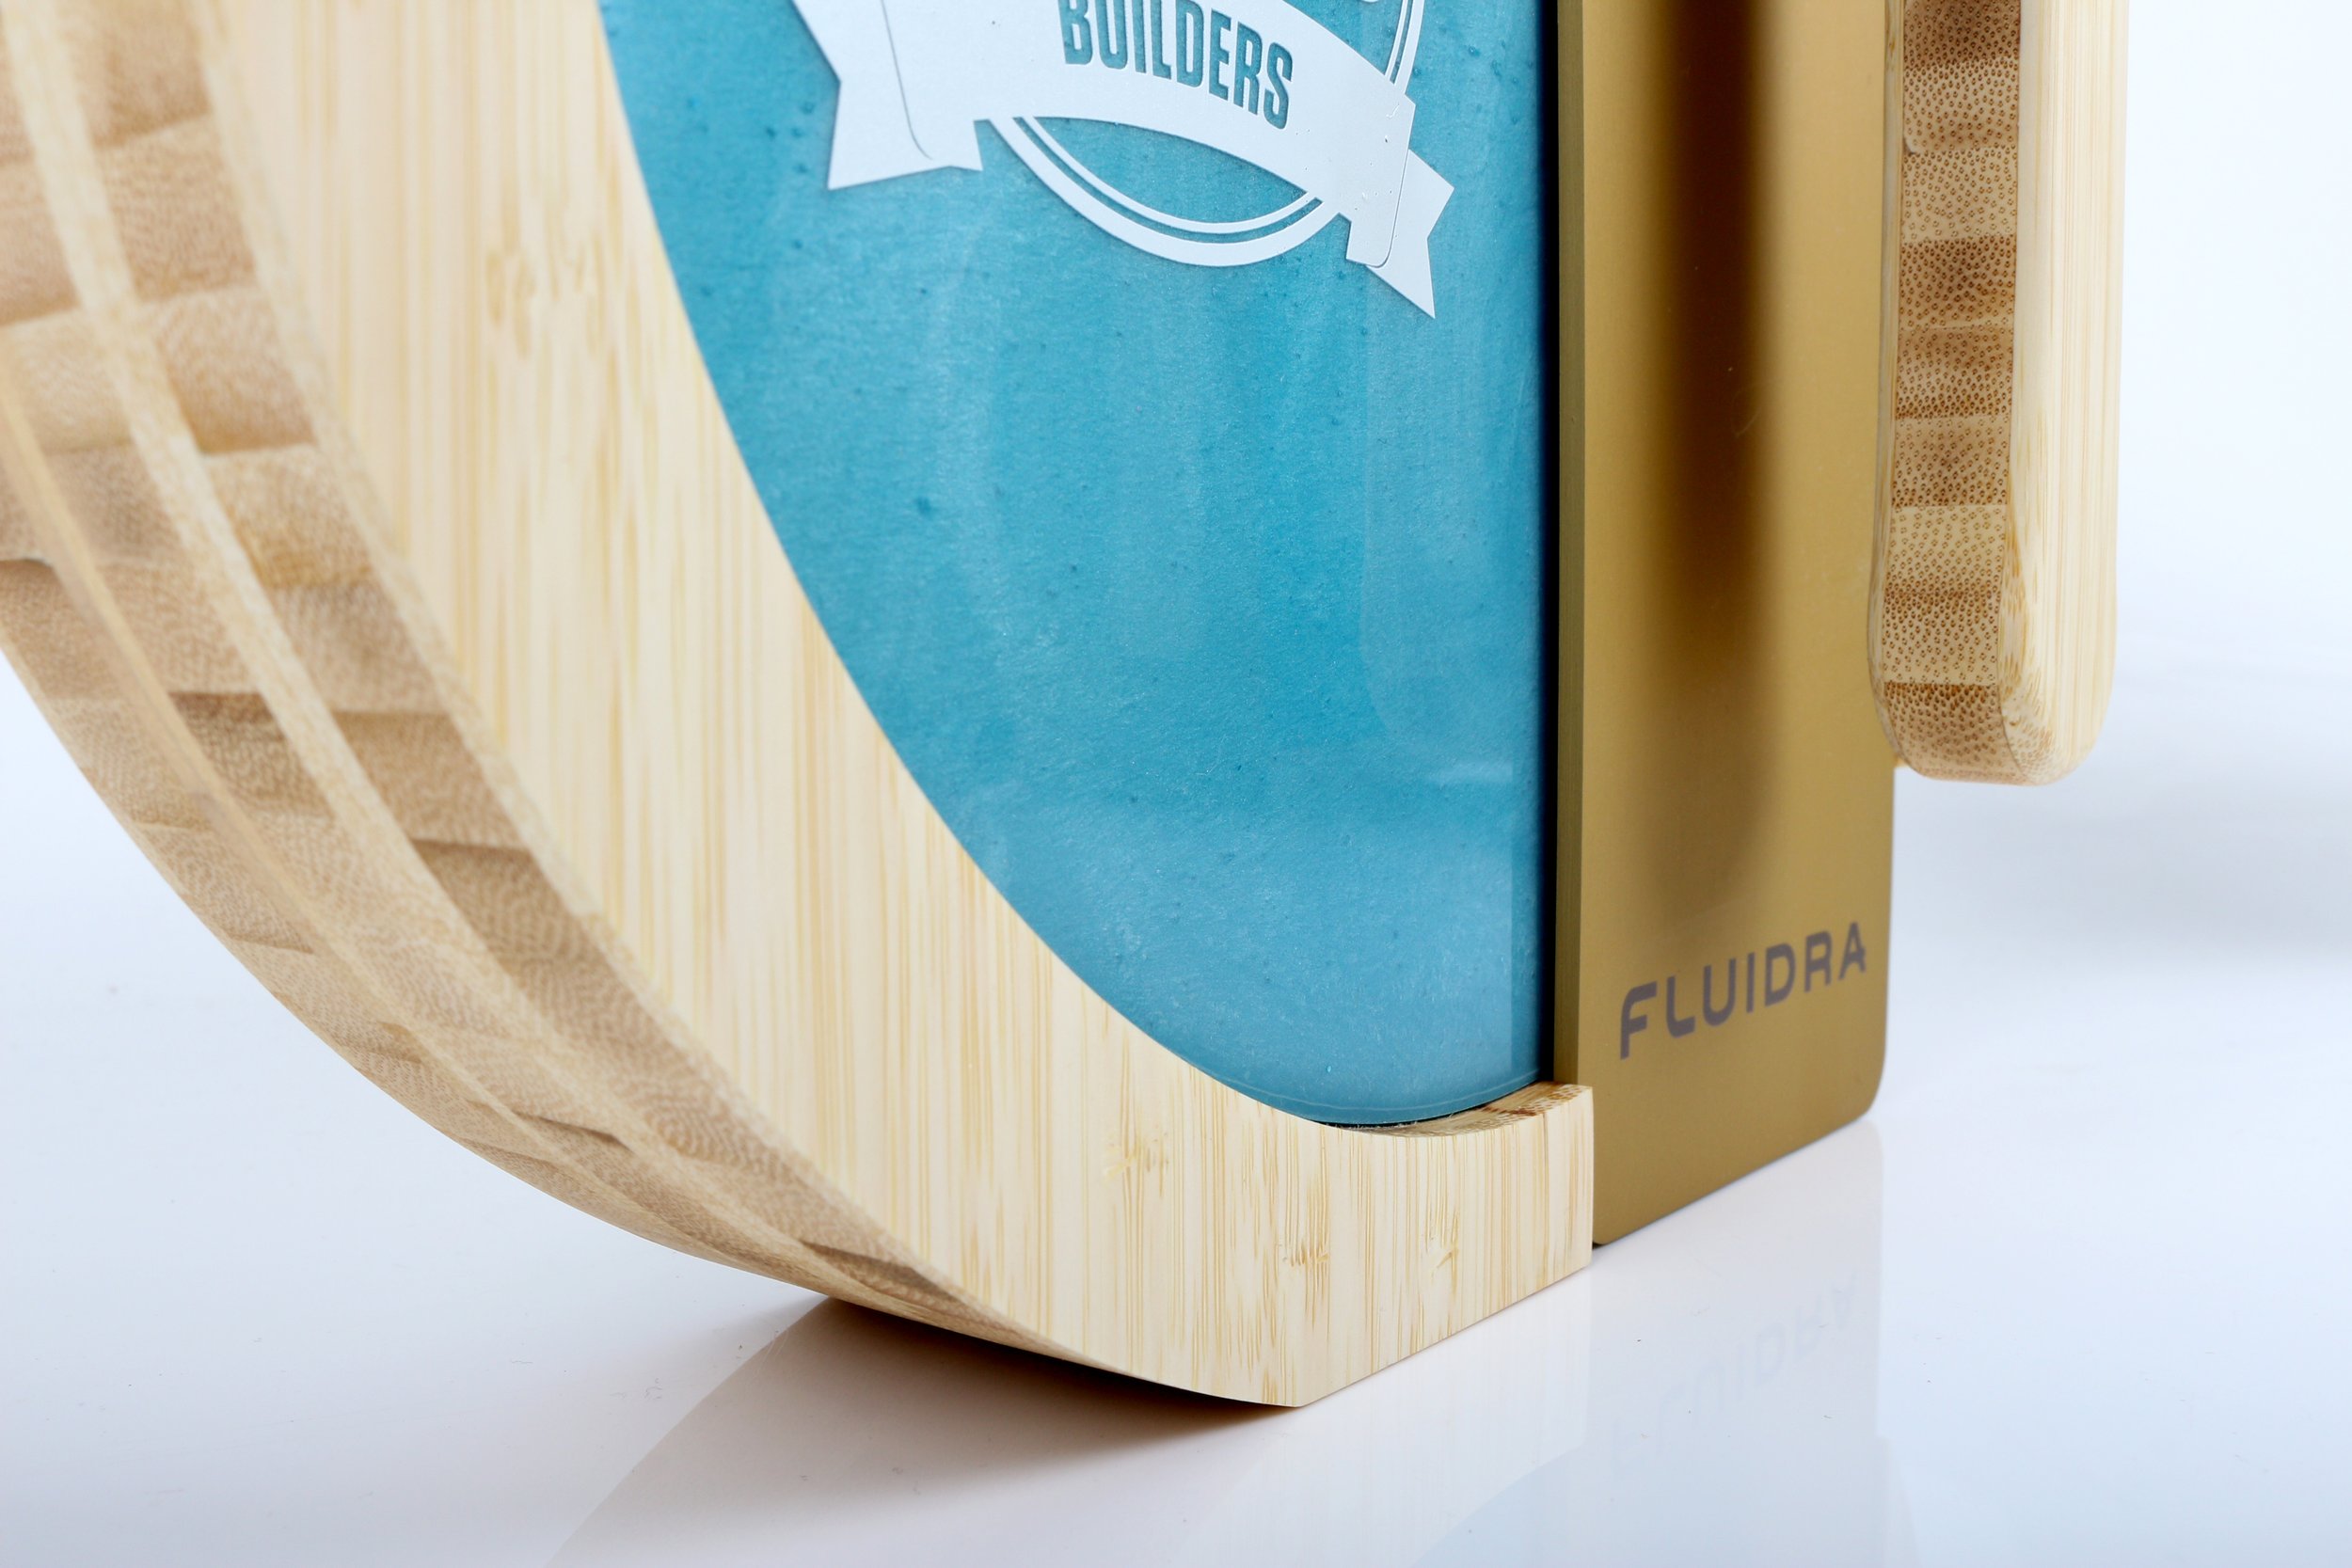 Custom designed award and trophy for Fluidra